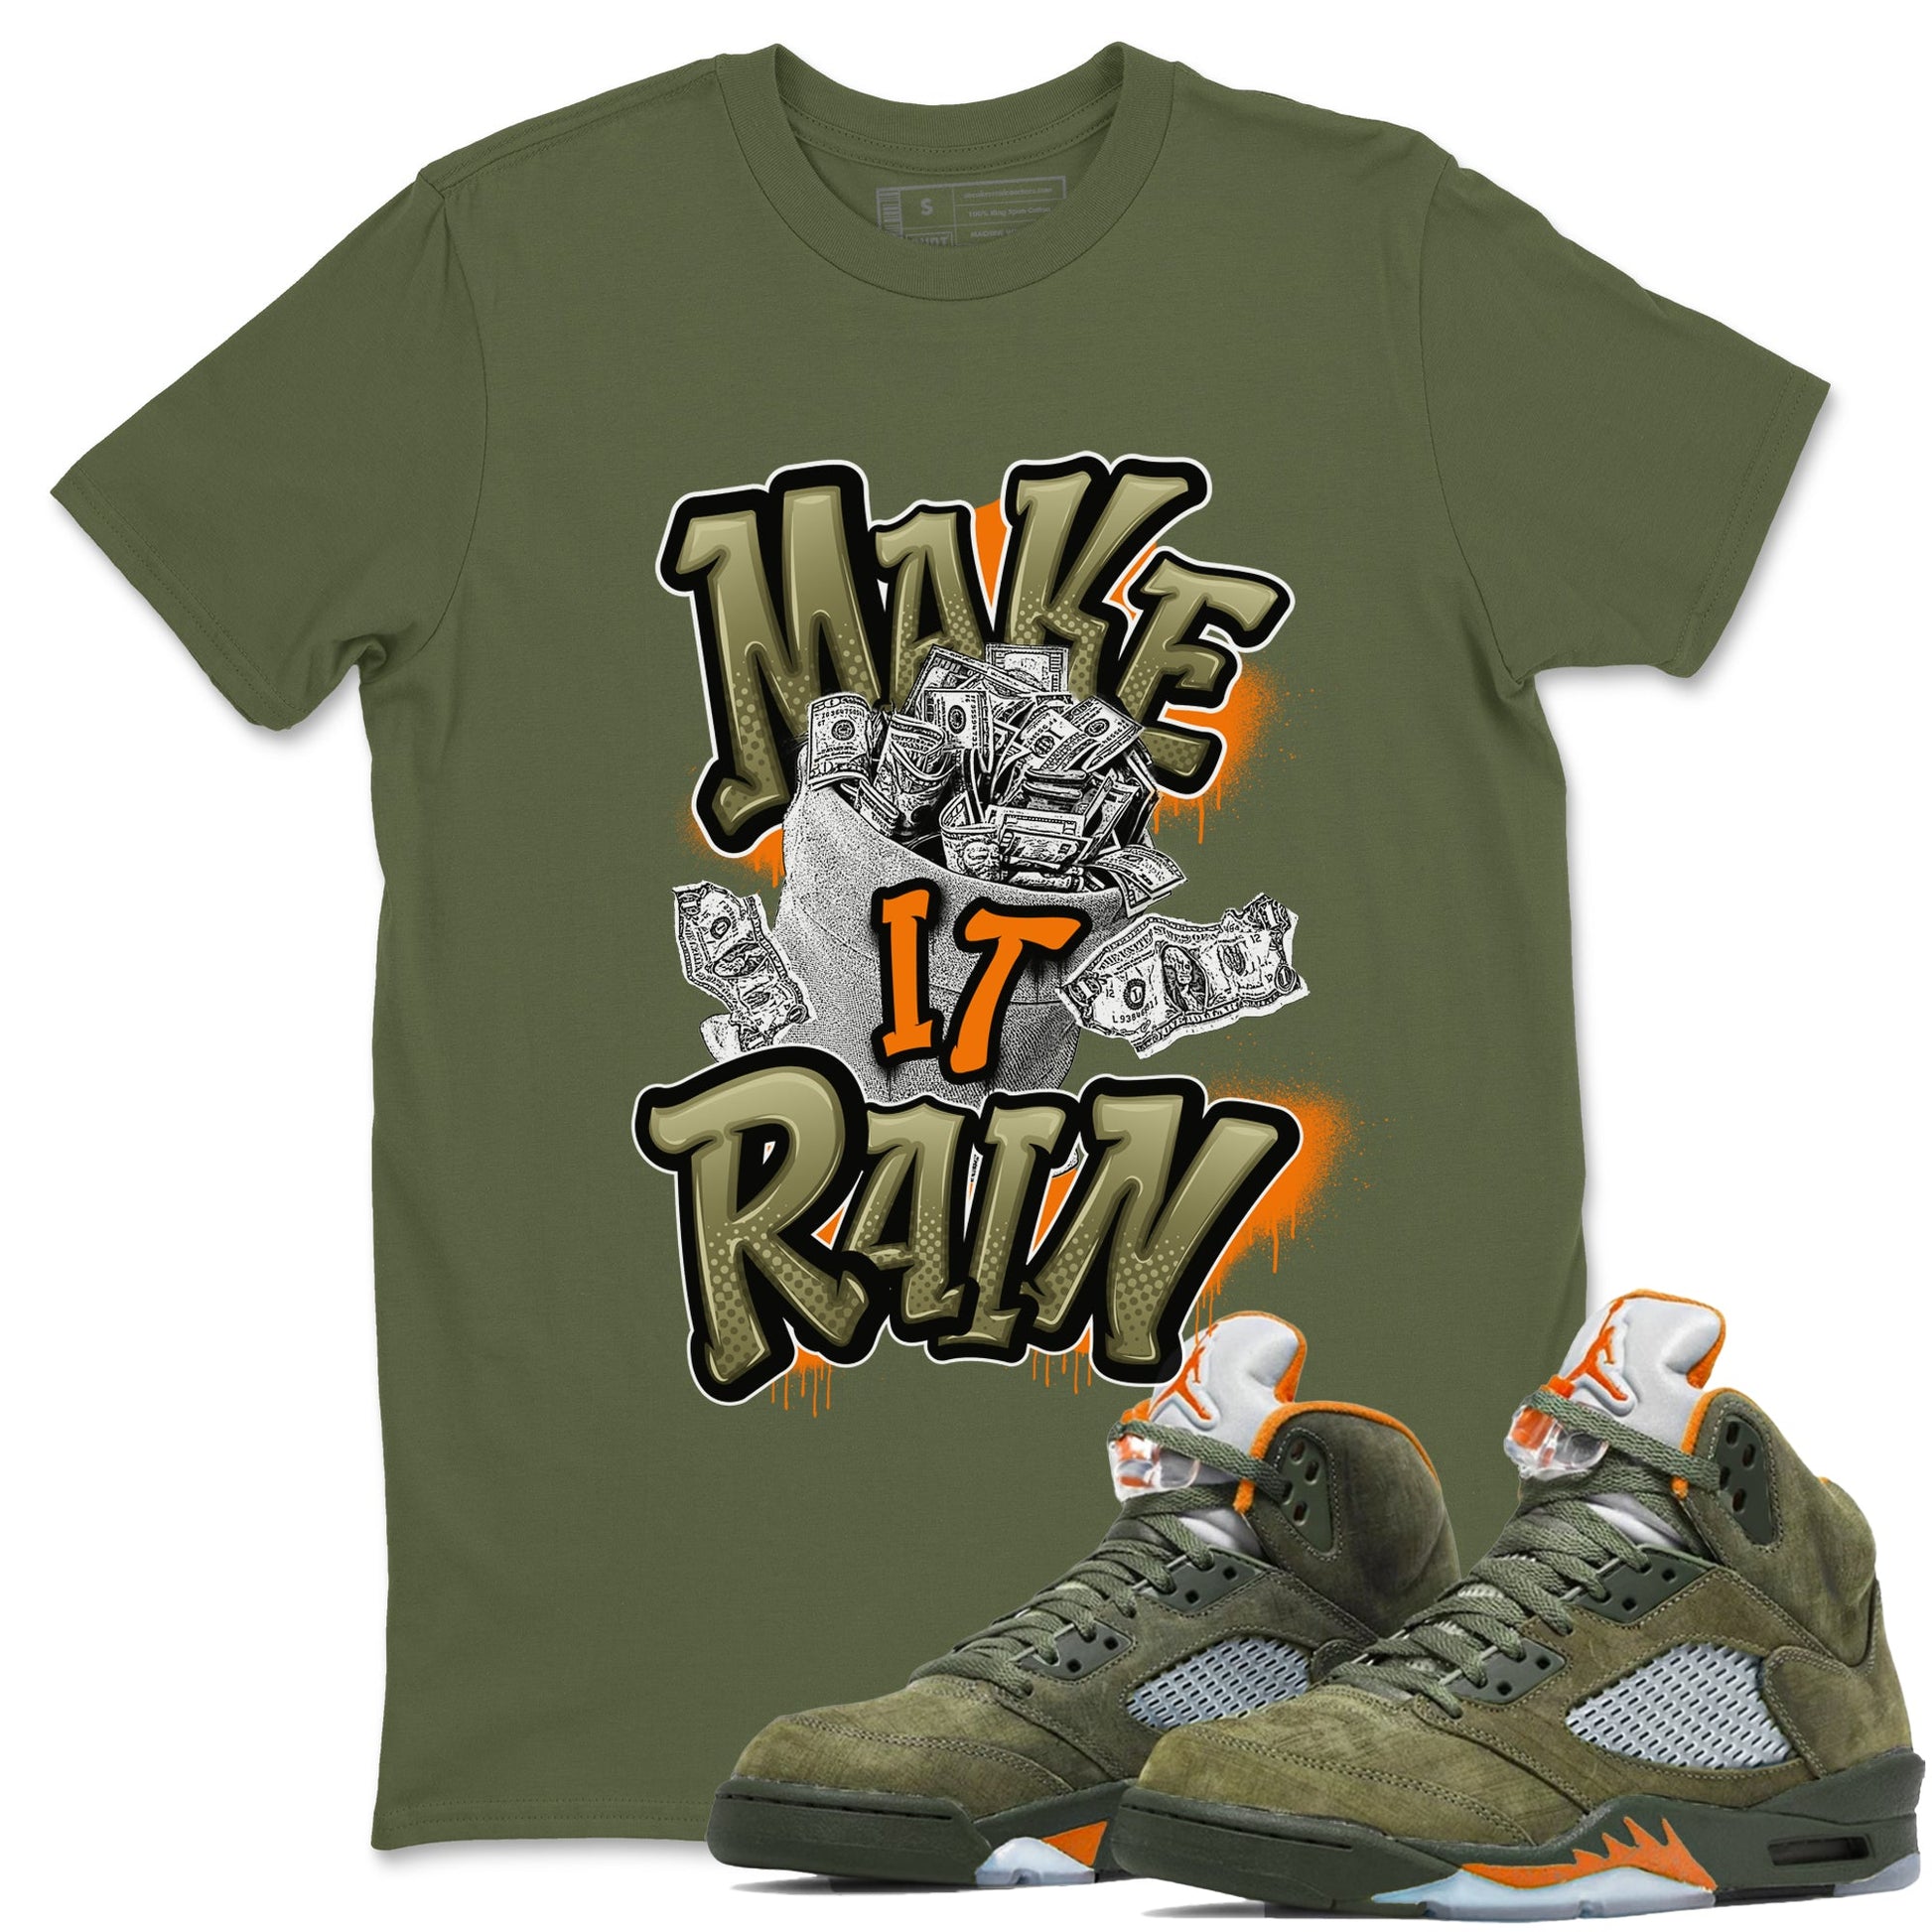 5s Olive shirt to match jordans Make It Rain sneaker tees Air Jordan 5 Olive SNRT Sneaker Release Tees unisex cotton Military Green 1 crew neck shirt